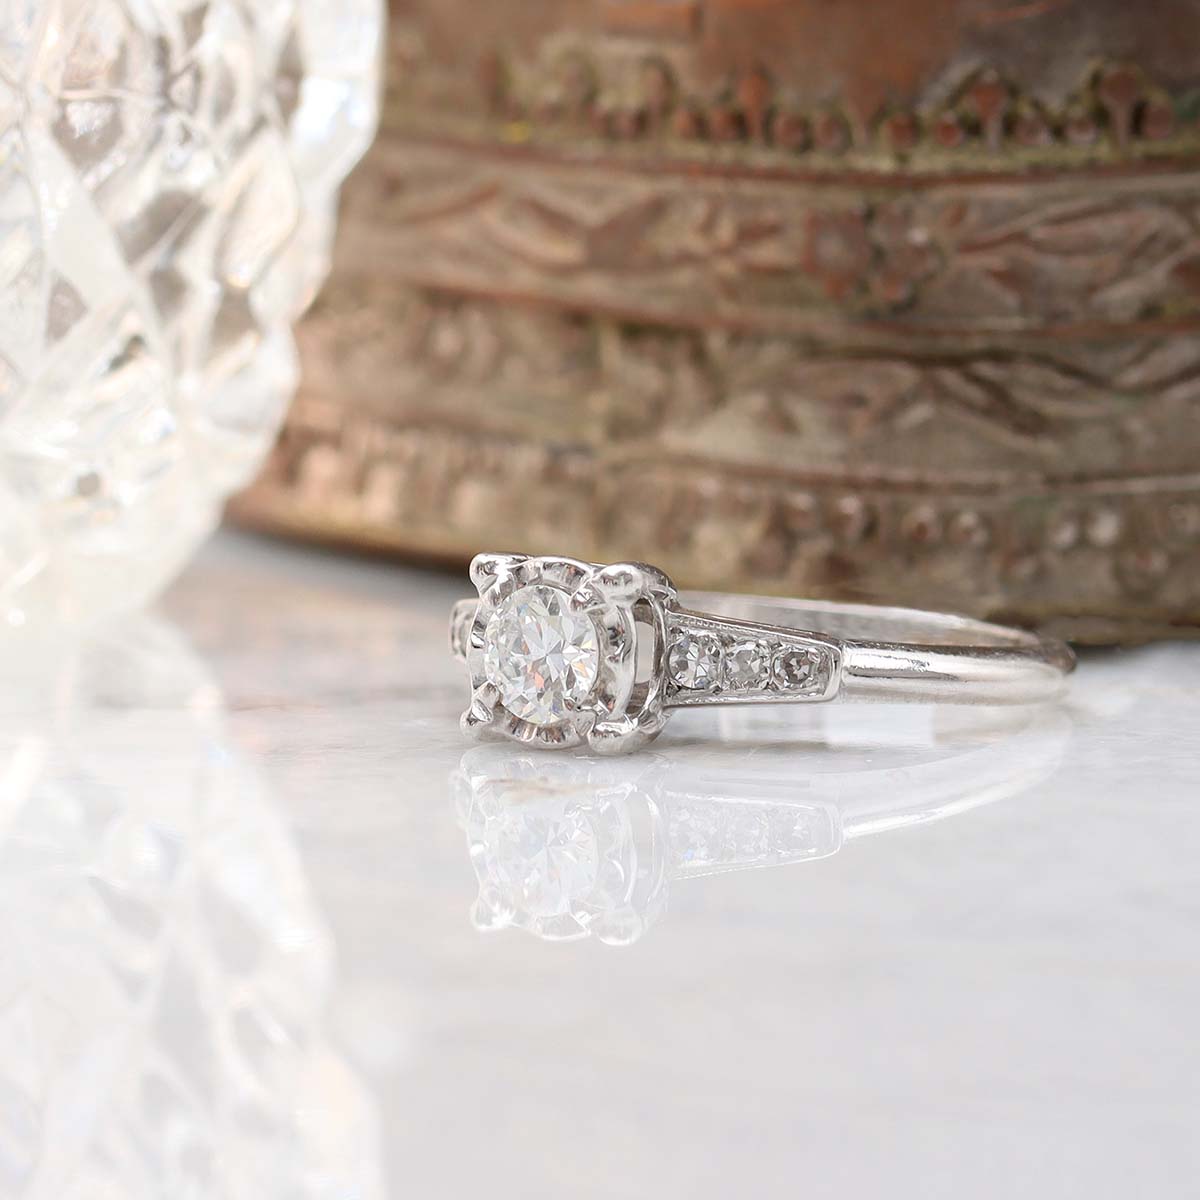 Circa 1940s Engagement Ring #VR200301